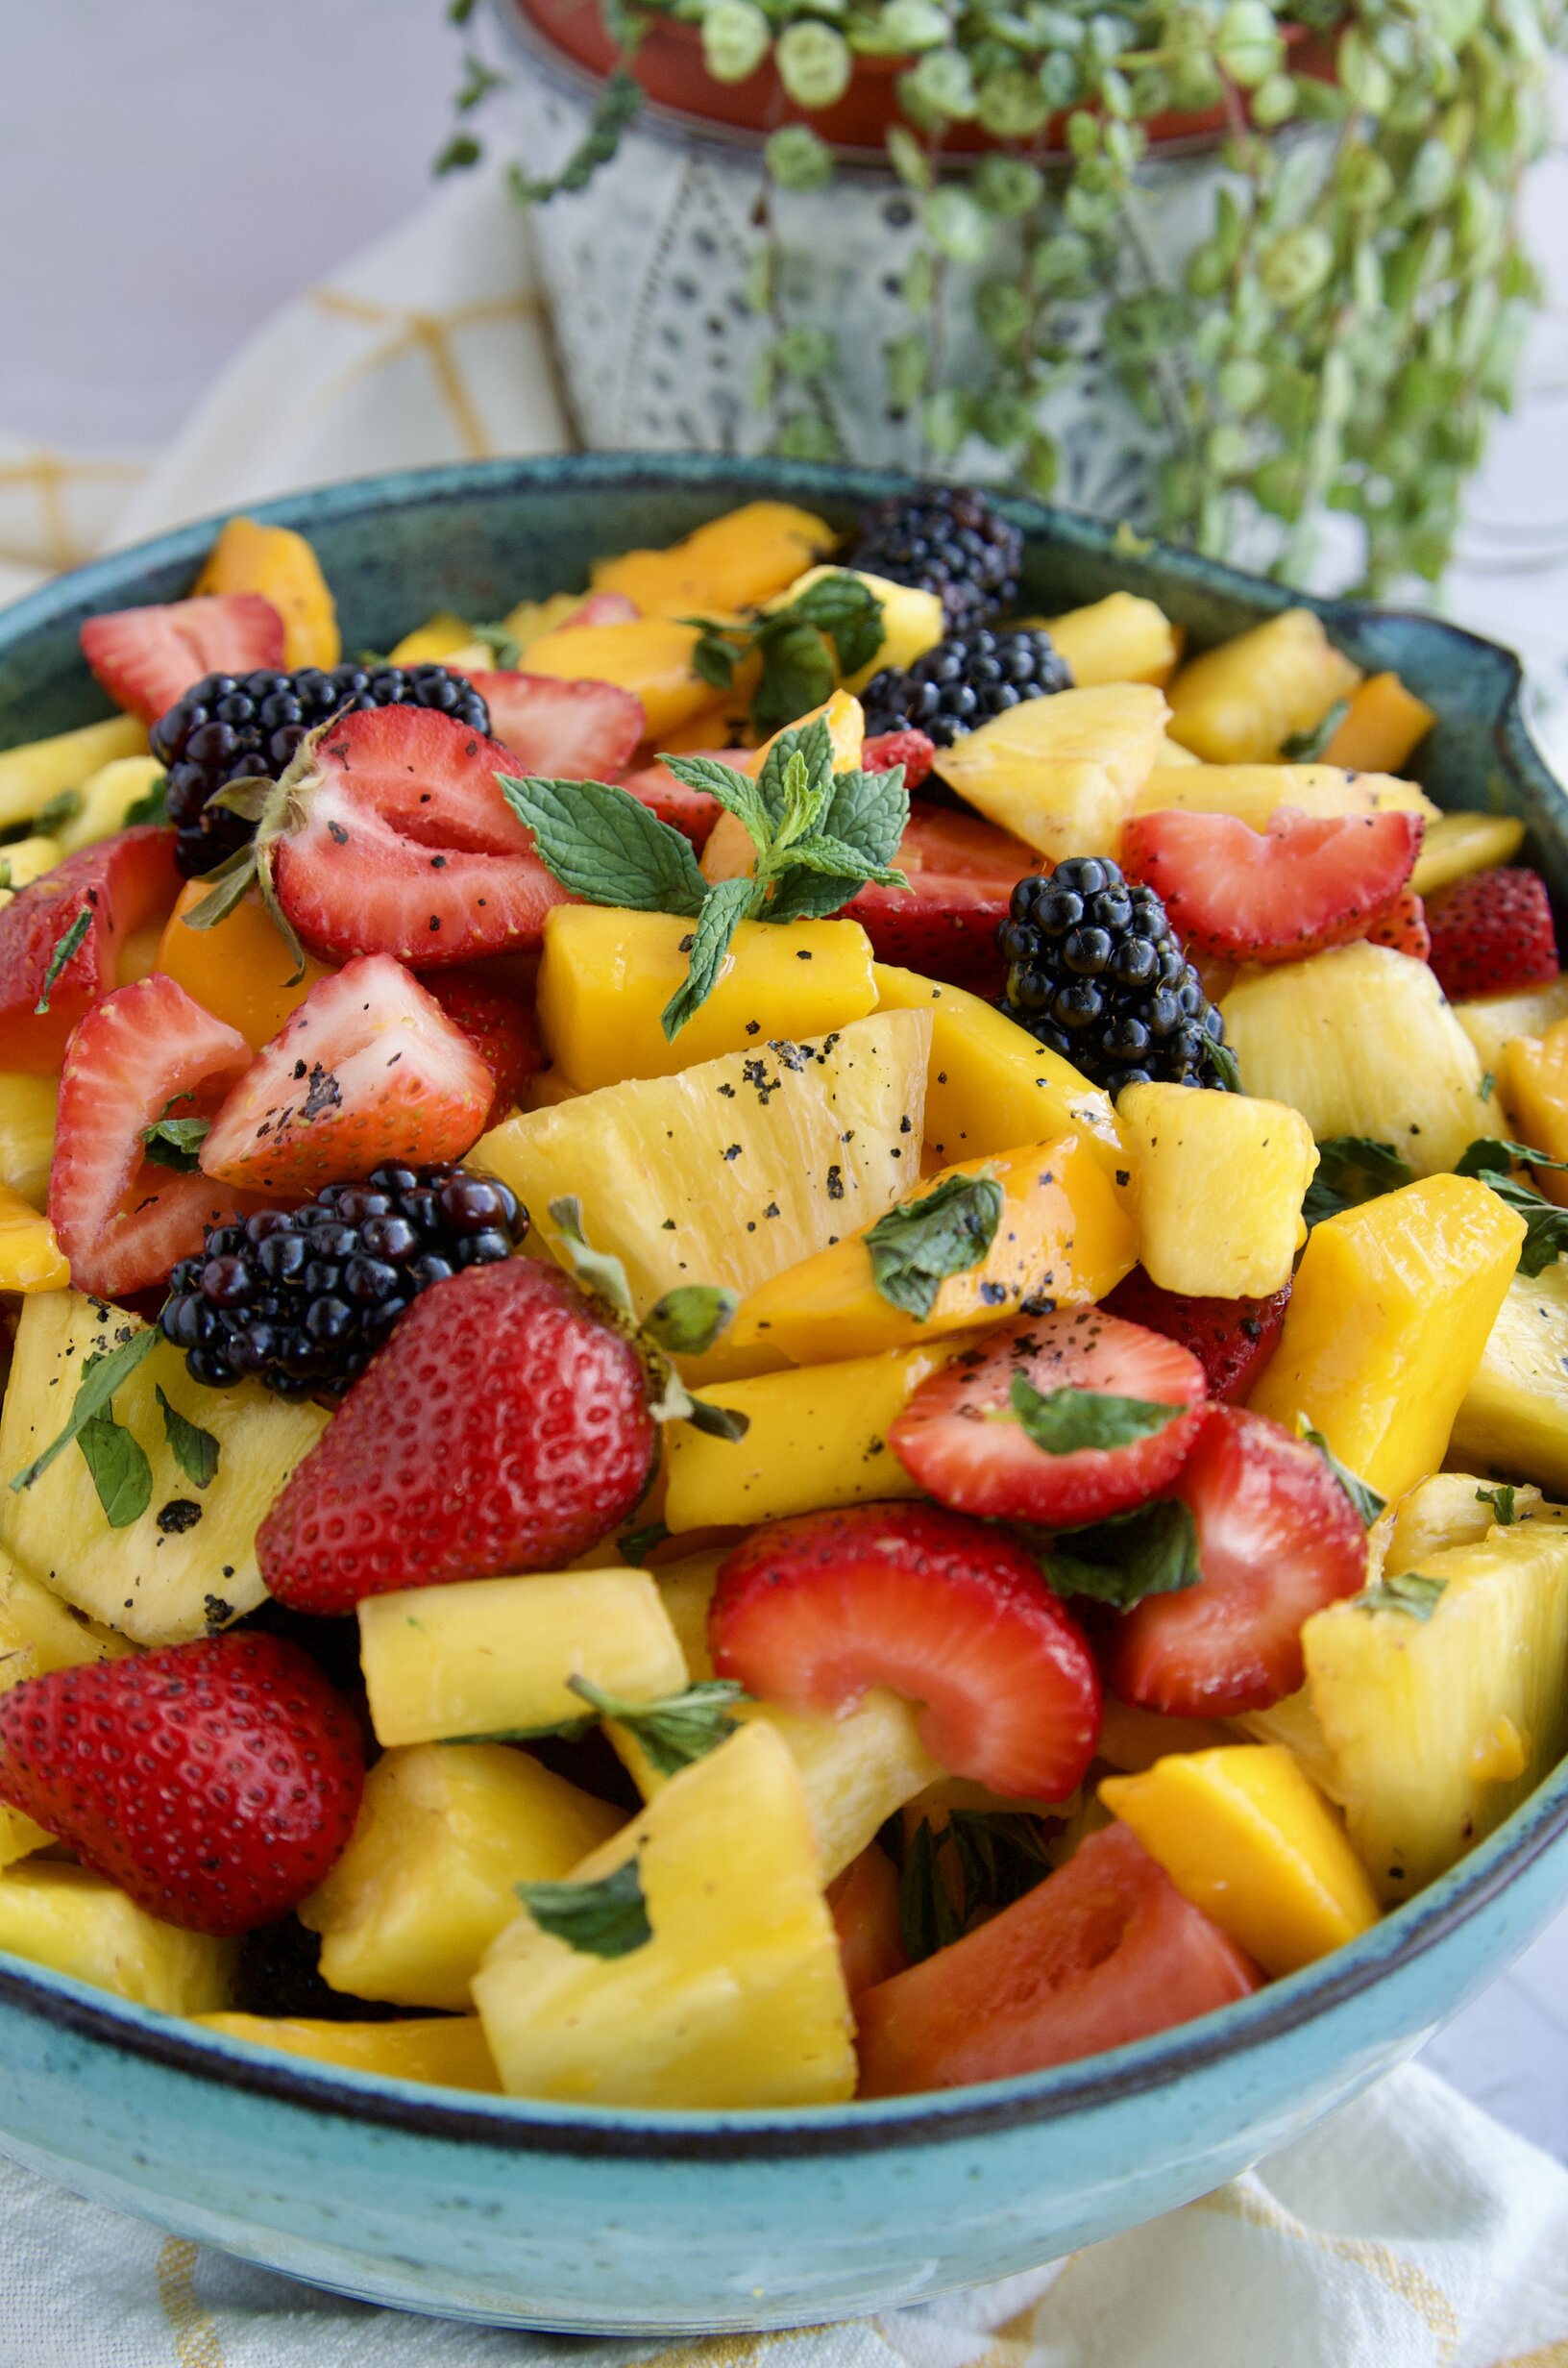 Marinated Fruit Salad